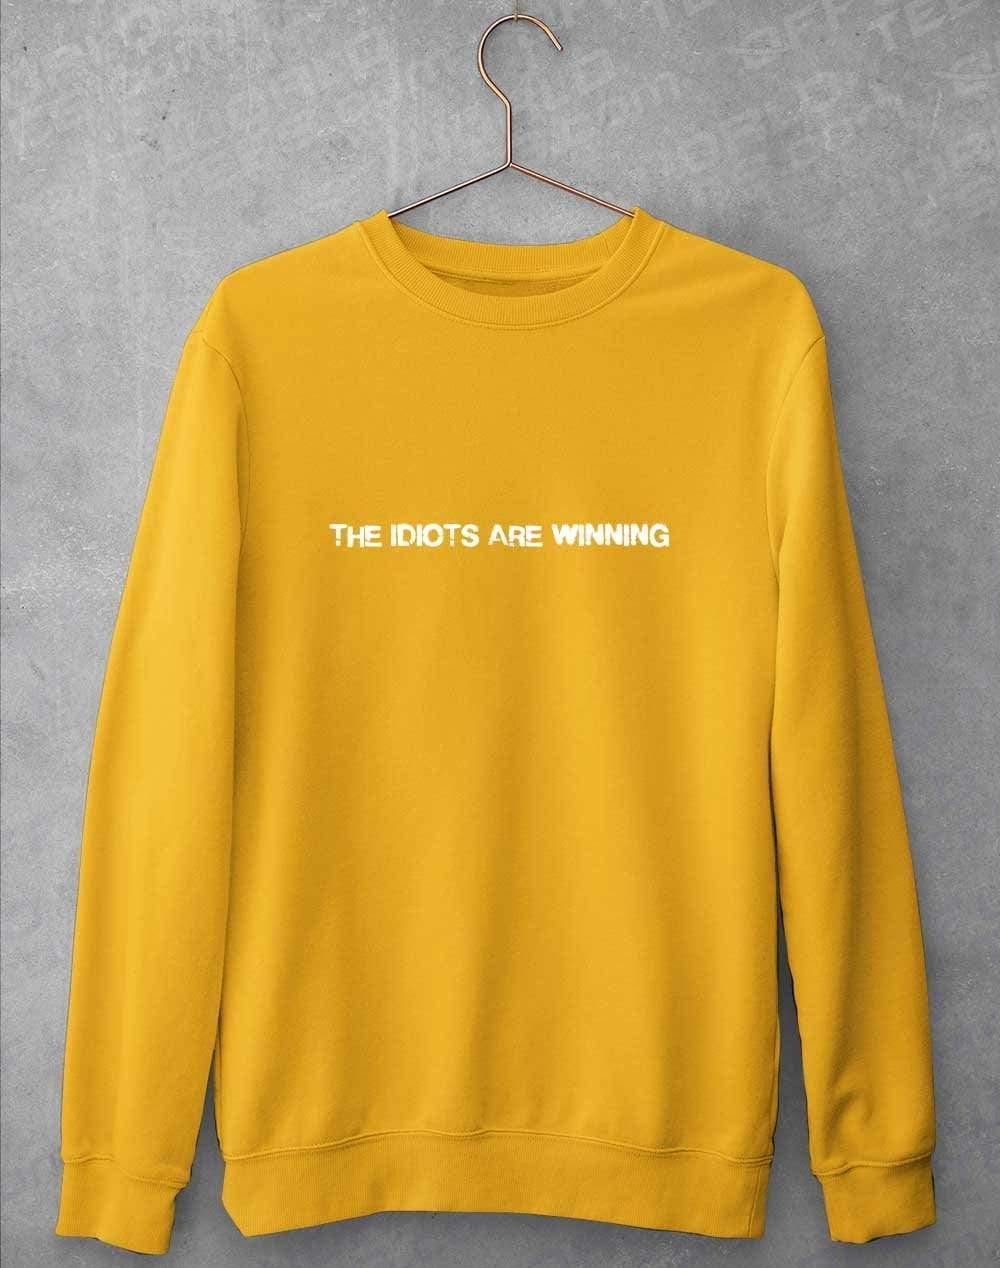 The Idiots Are Winning Sweatshirt S / Gold  - Off World Tees